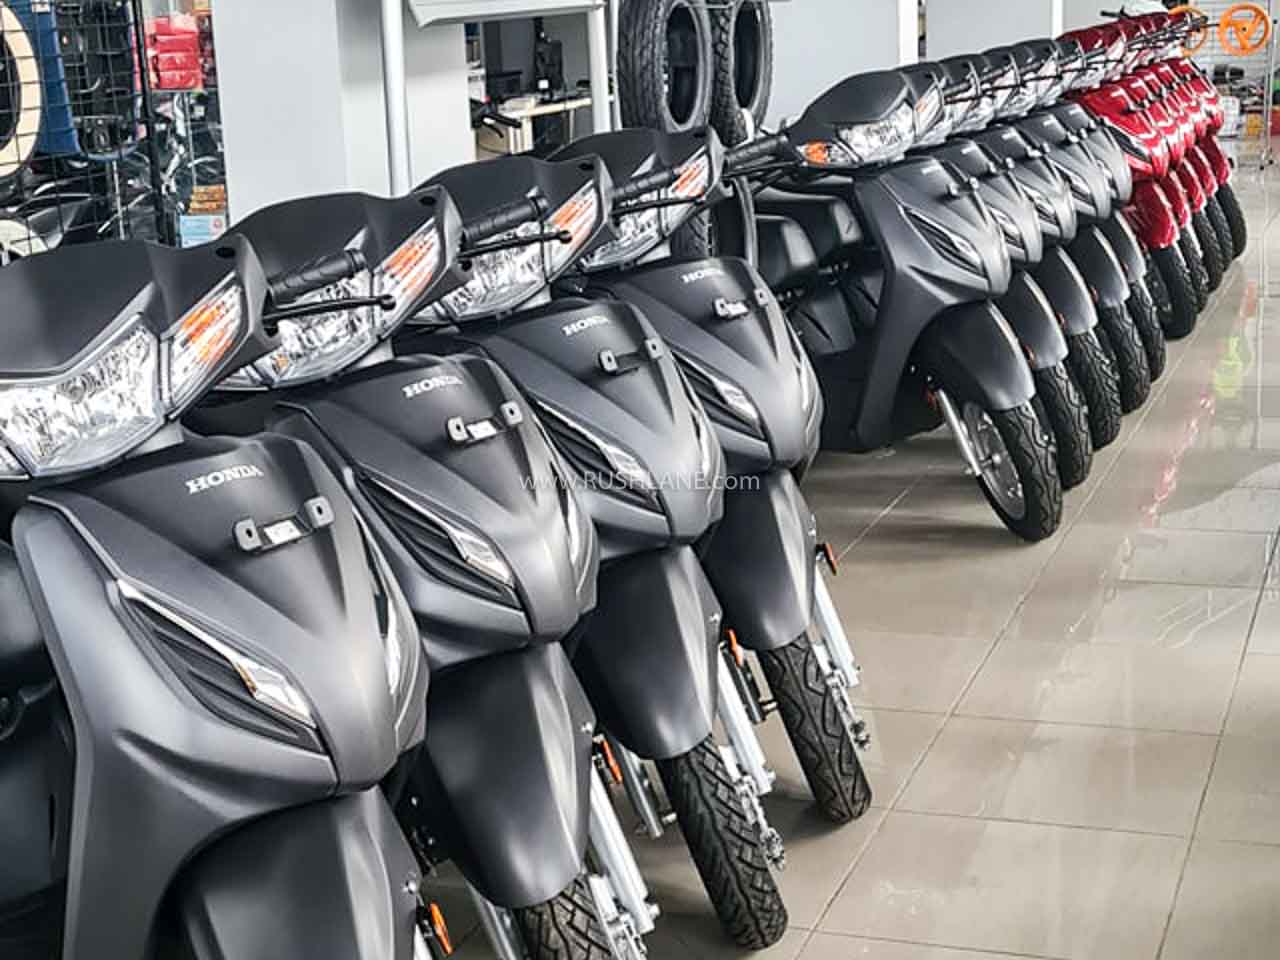 Honda Scooter, Motorcycle Sales July 2021